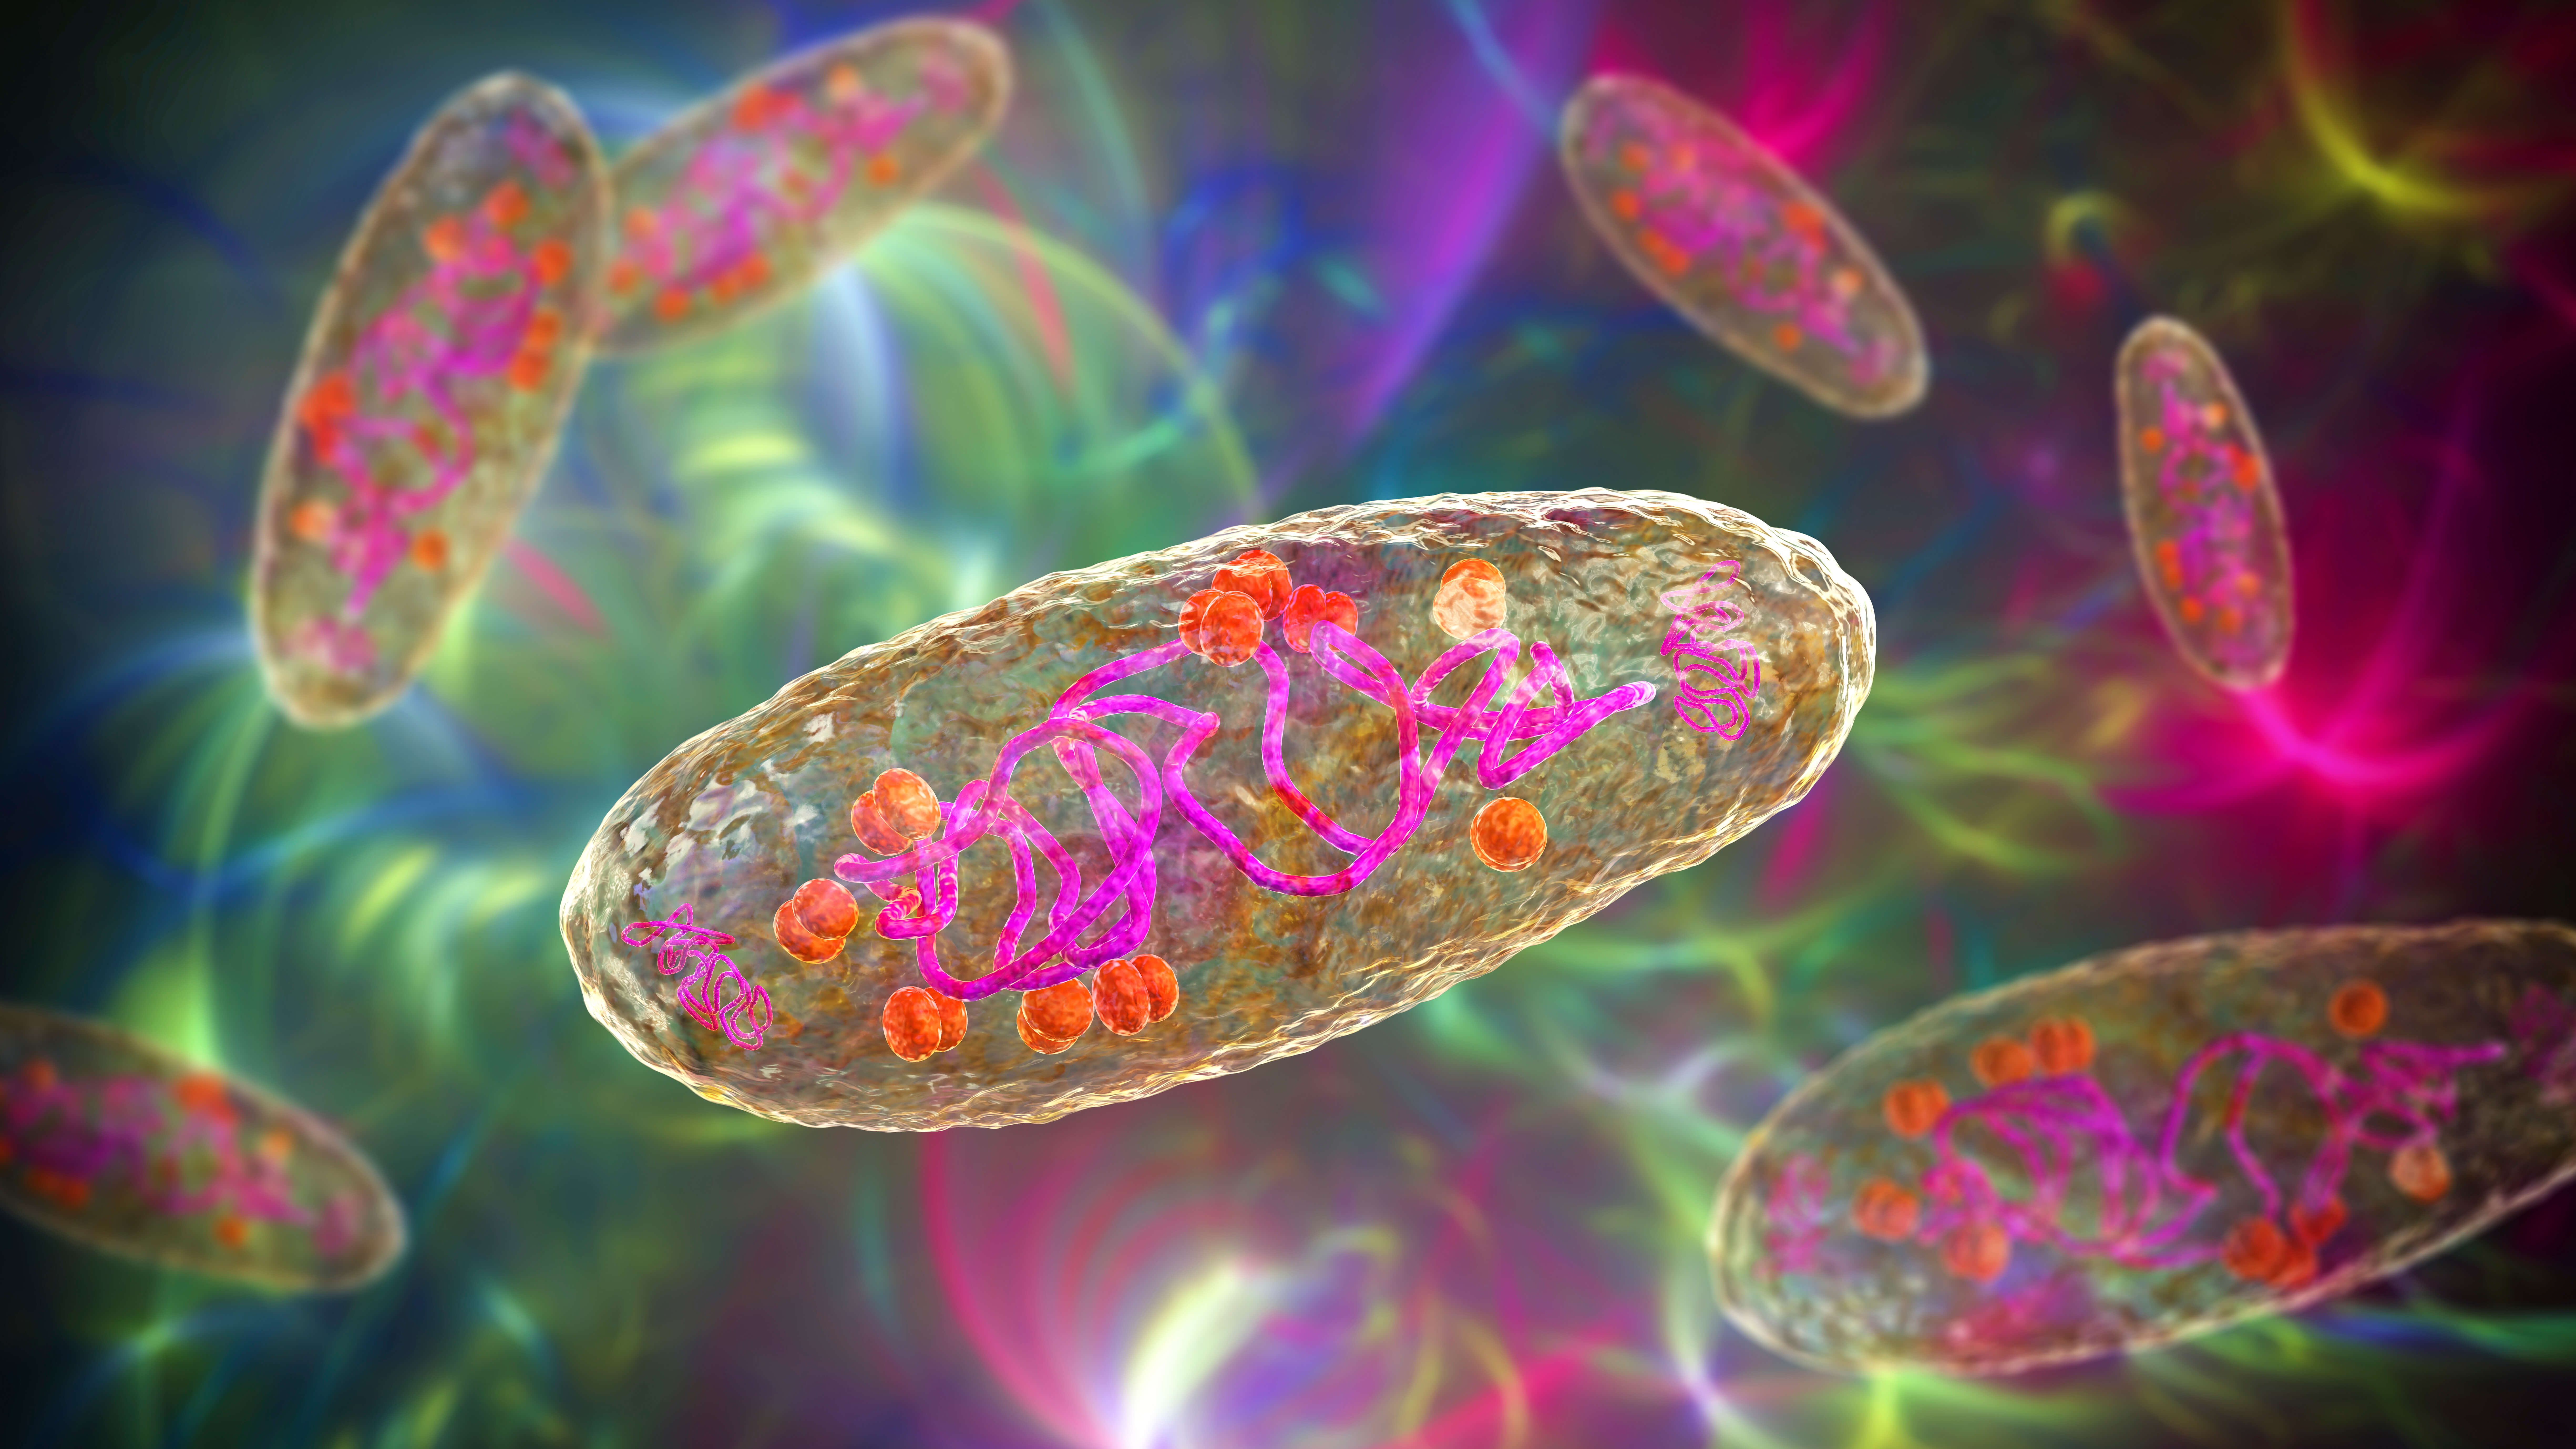 General depiction of bacteria carrying plasmids. Image credit: AdobeStock (stock.adobe.com), © Dr_Microbee (artist).